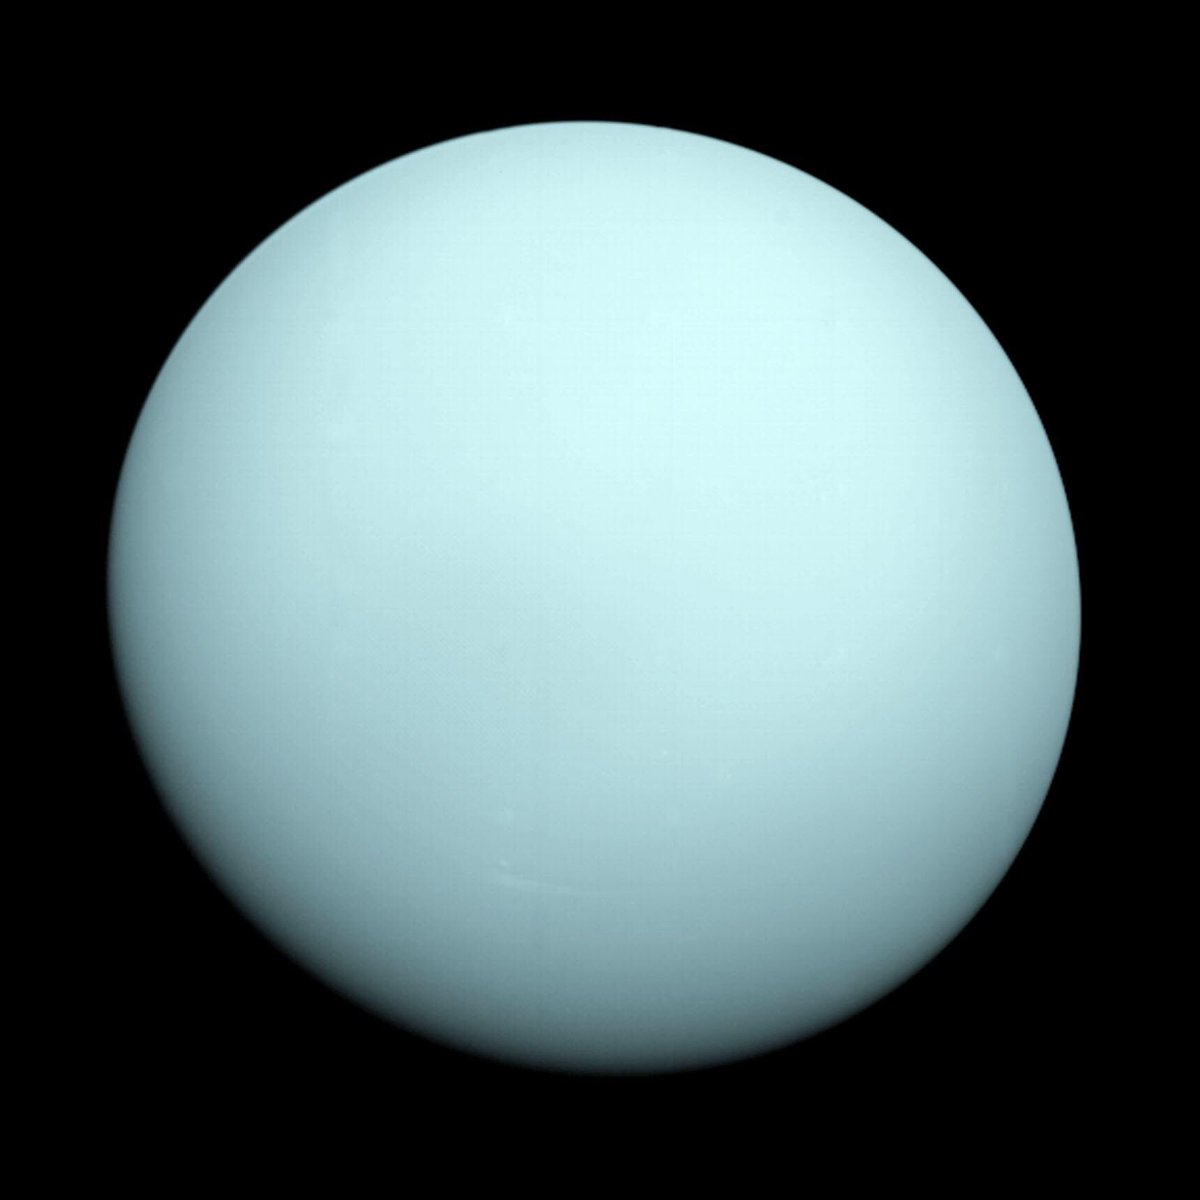 Uranus as seen from Voyager 2